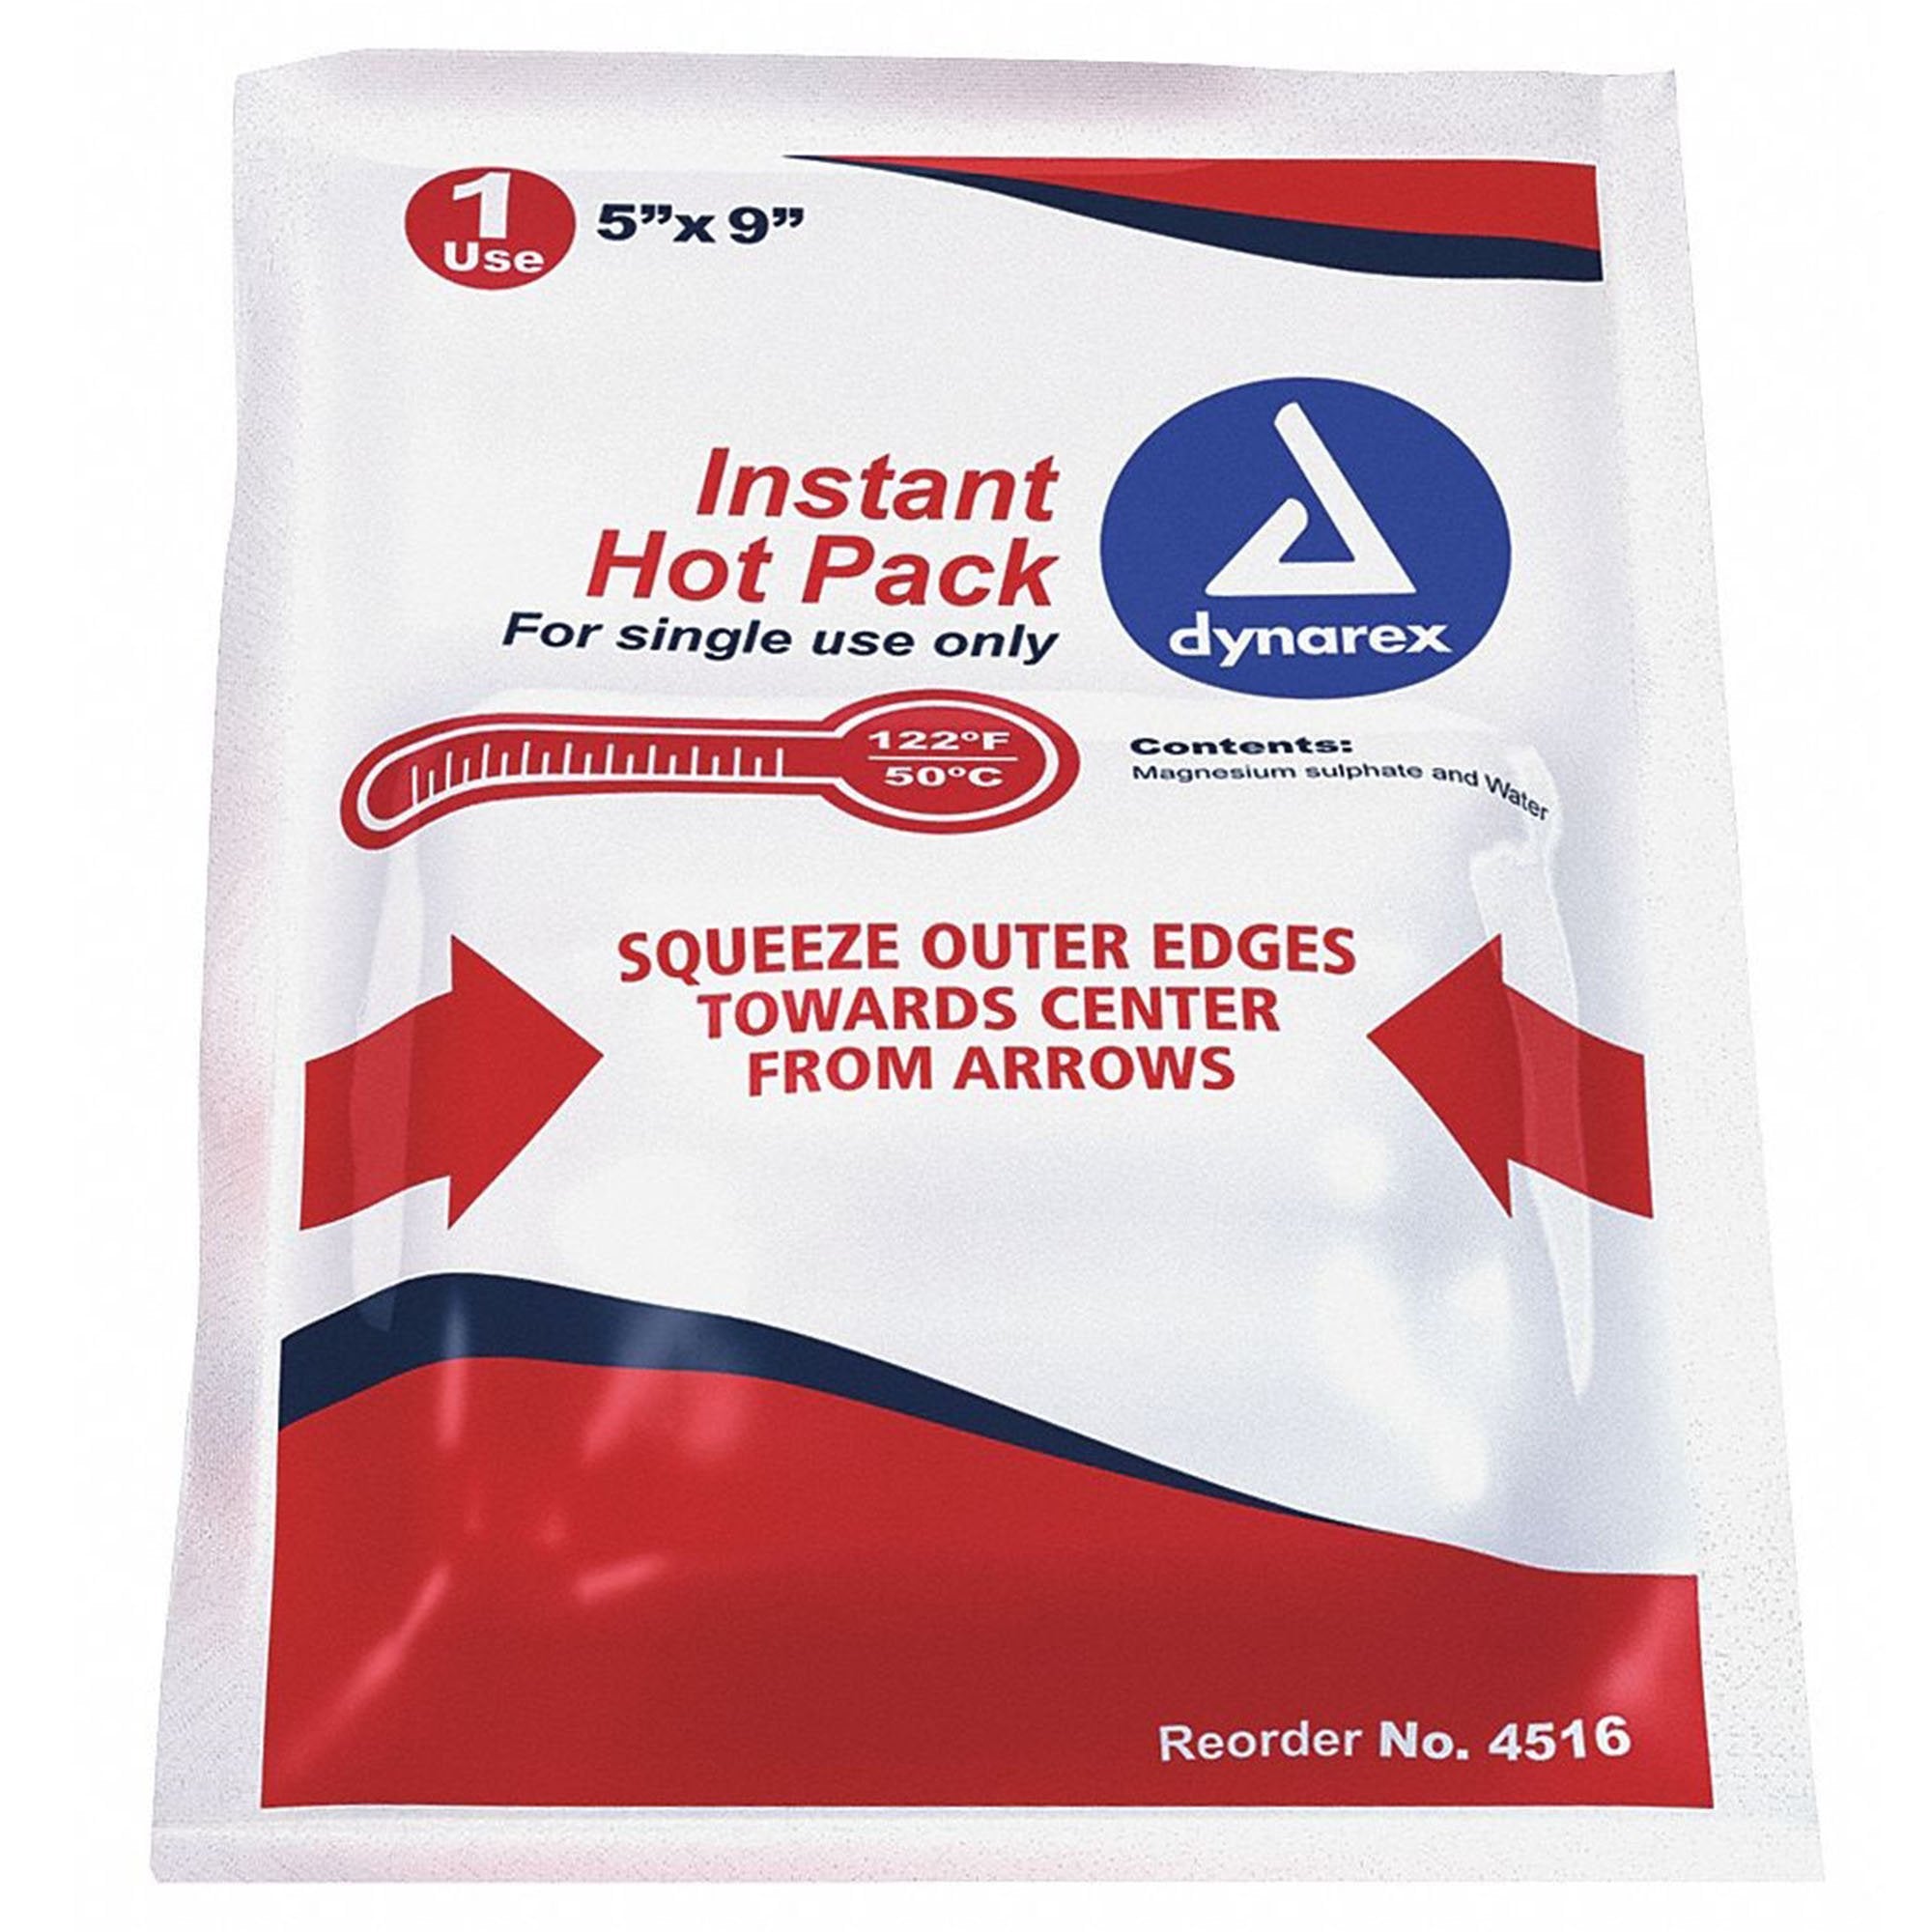 Instant Disposable Dynarex Hot Pack Dynarex General Purpose